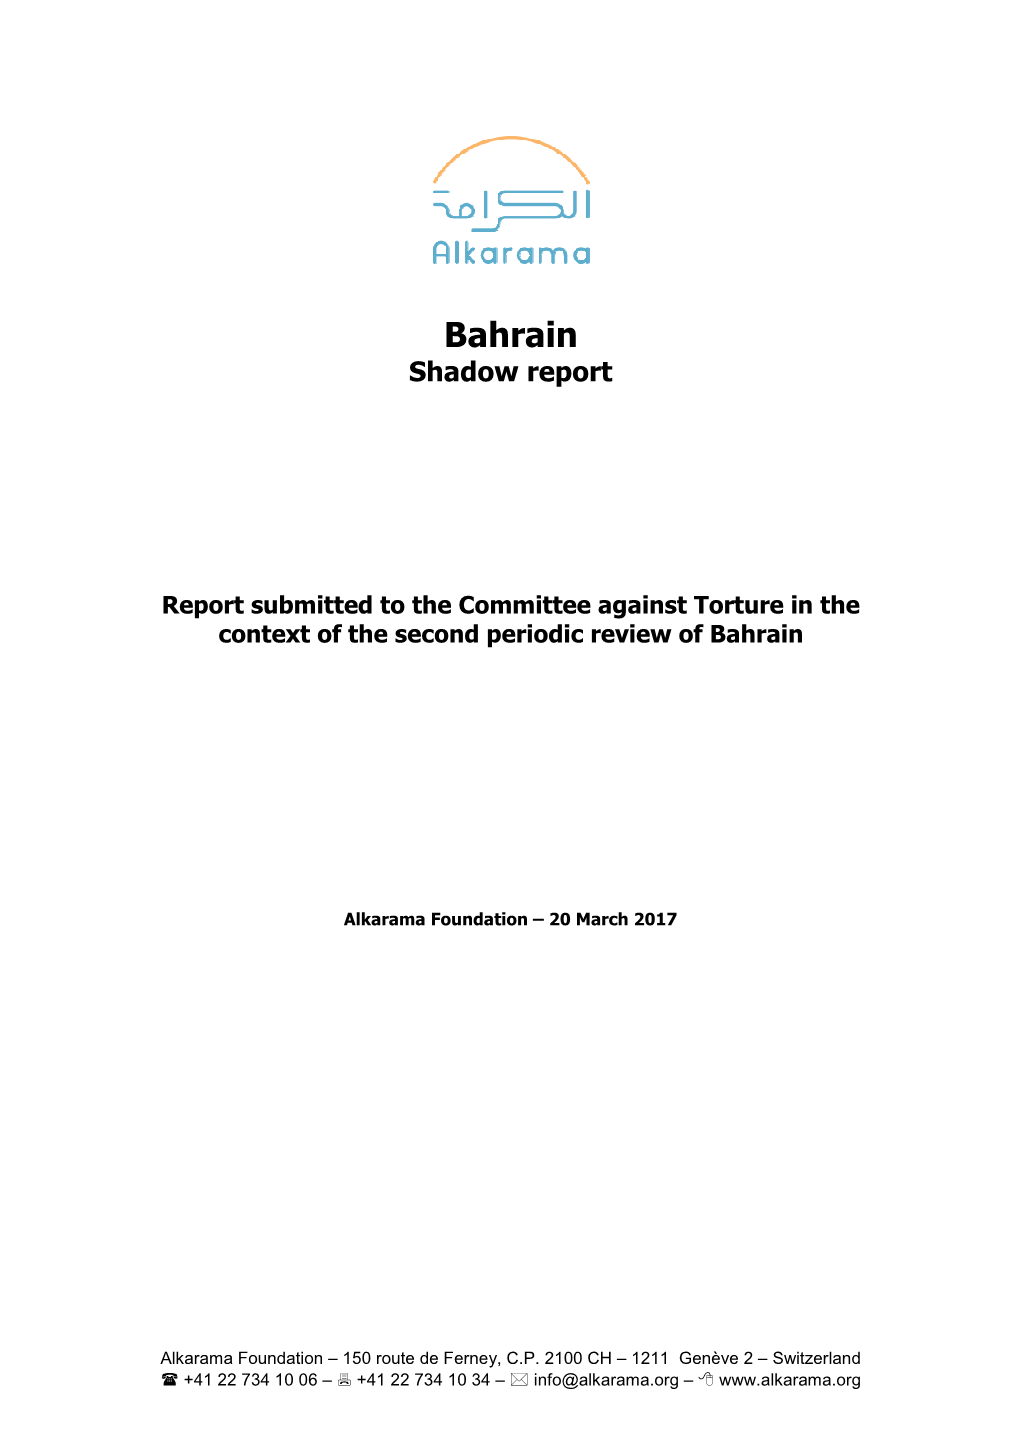 Bahrain Shadow Report